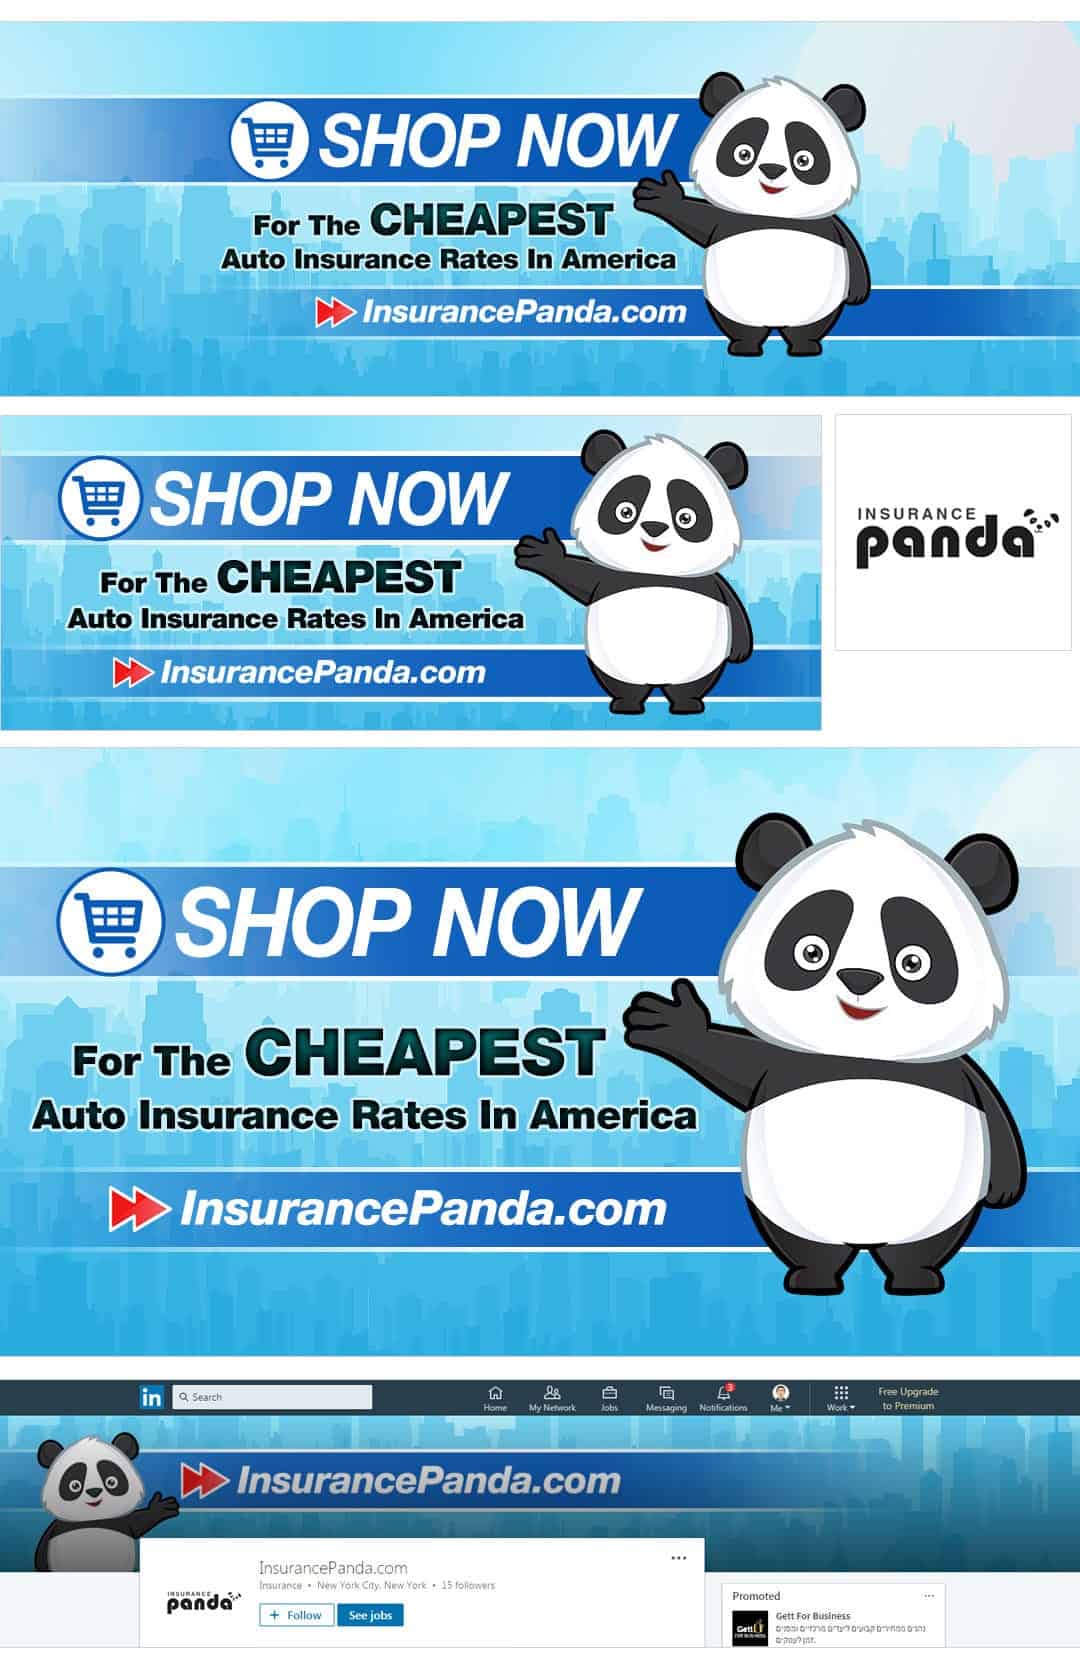 Social Media Package Example for Insurance Panda